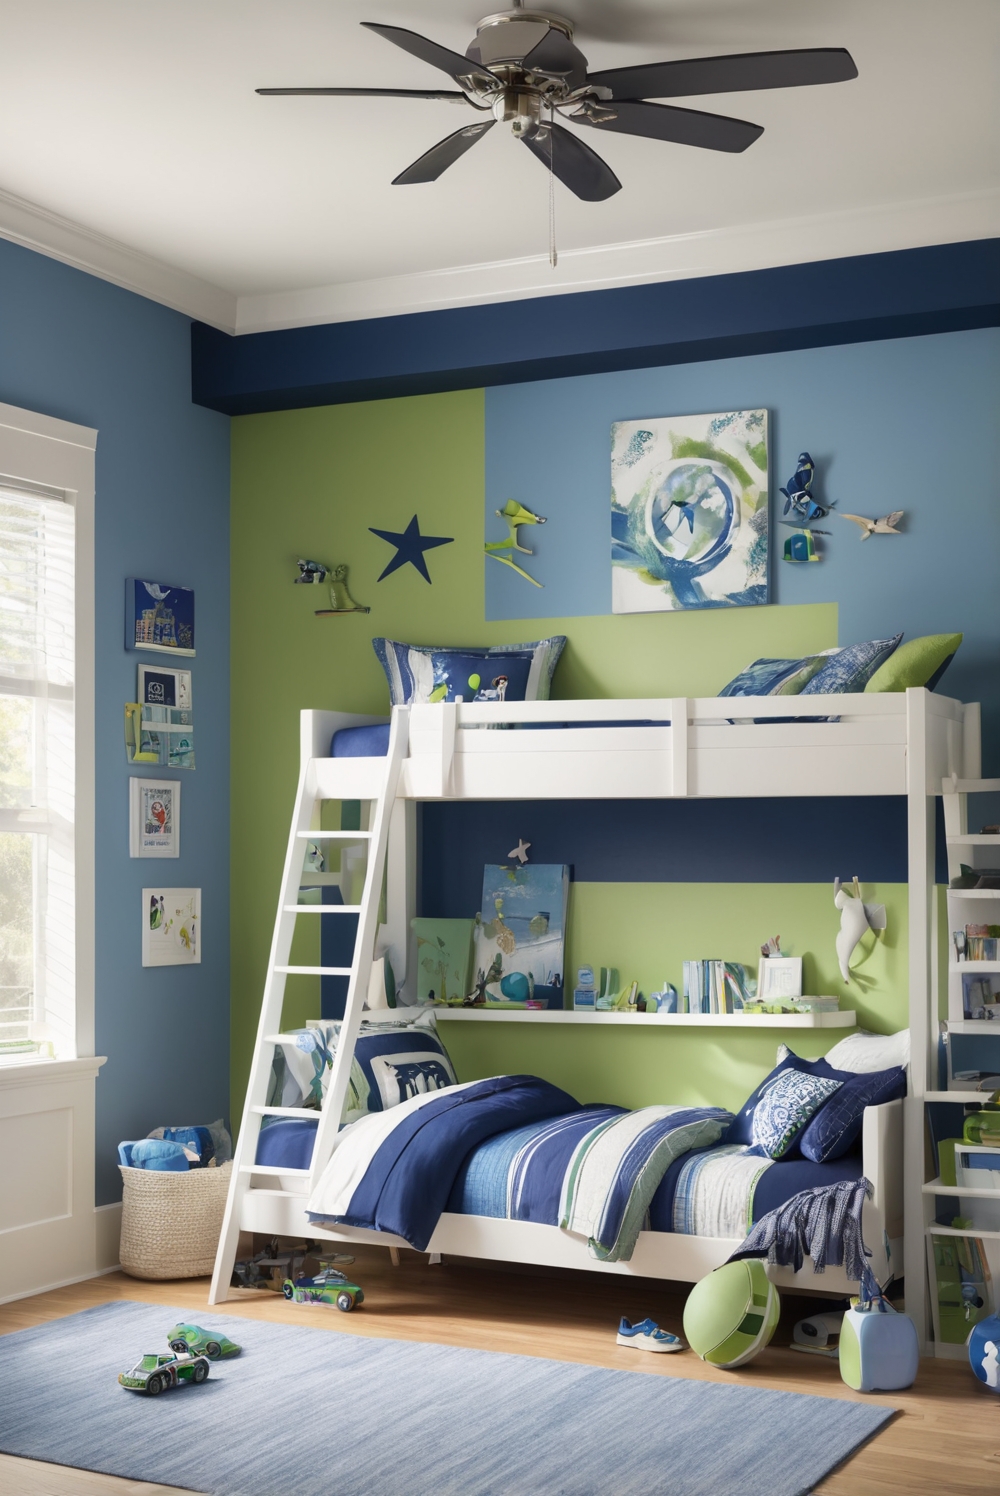 bedroom interior design, home decor ideas, interior design for home, kids bedroom ideas, home decorating tips